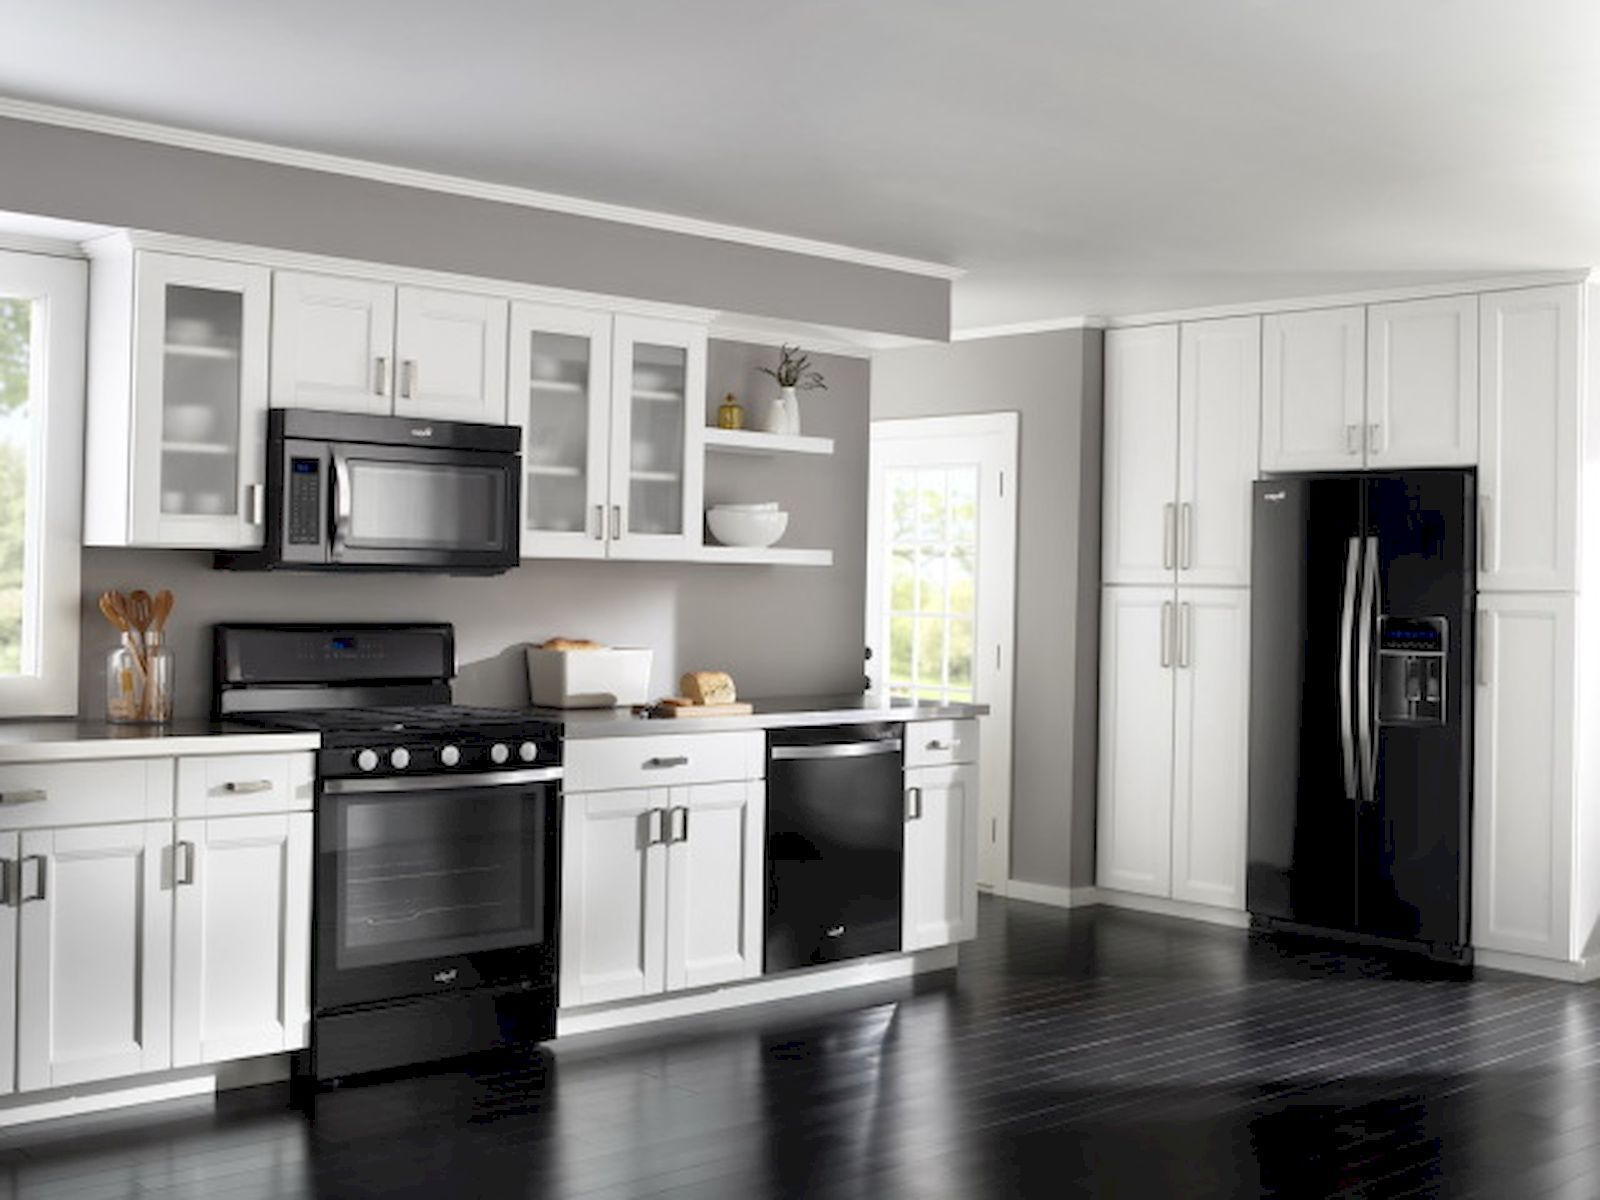 70 Luxury White Kitchen Design Ideas And Decor - 70 Luxury White Kitchen Design Ideas And Decor -   Kitchen white cabinets & black appliances Ideas